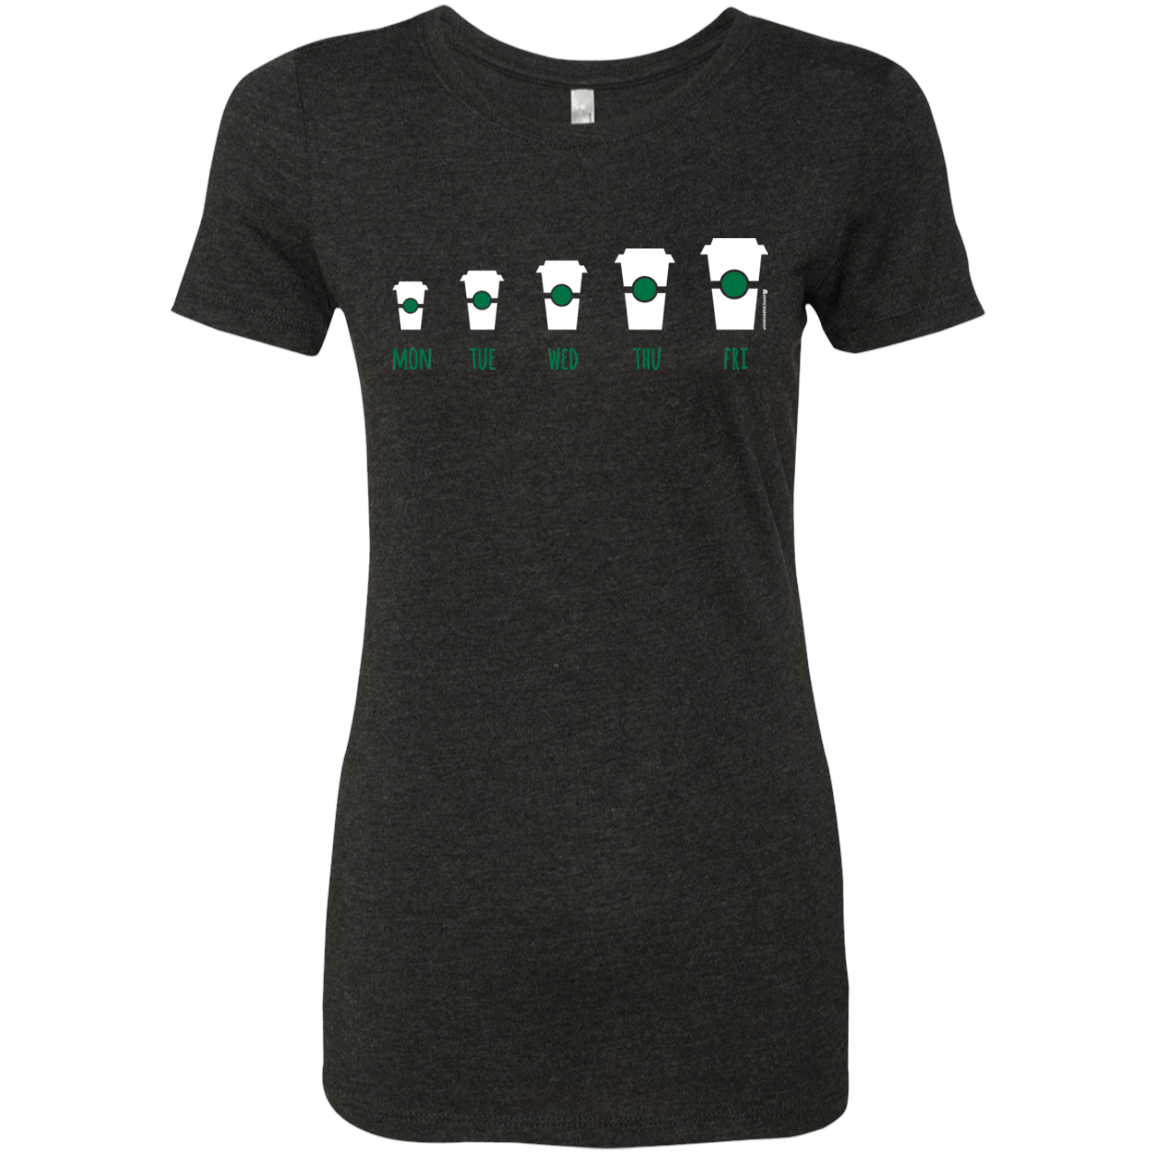 T-Shirts Vintage Black / Small Coffee Week Women's Triblend T-Shirt